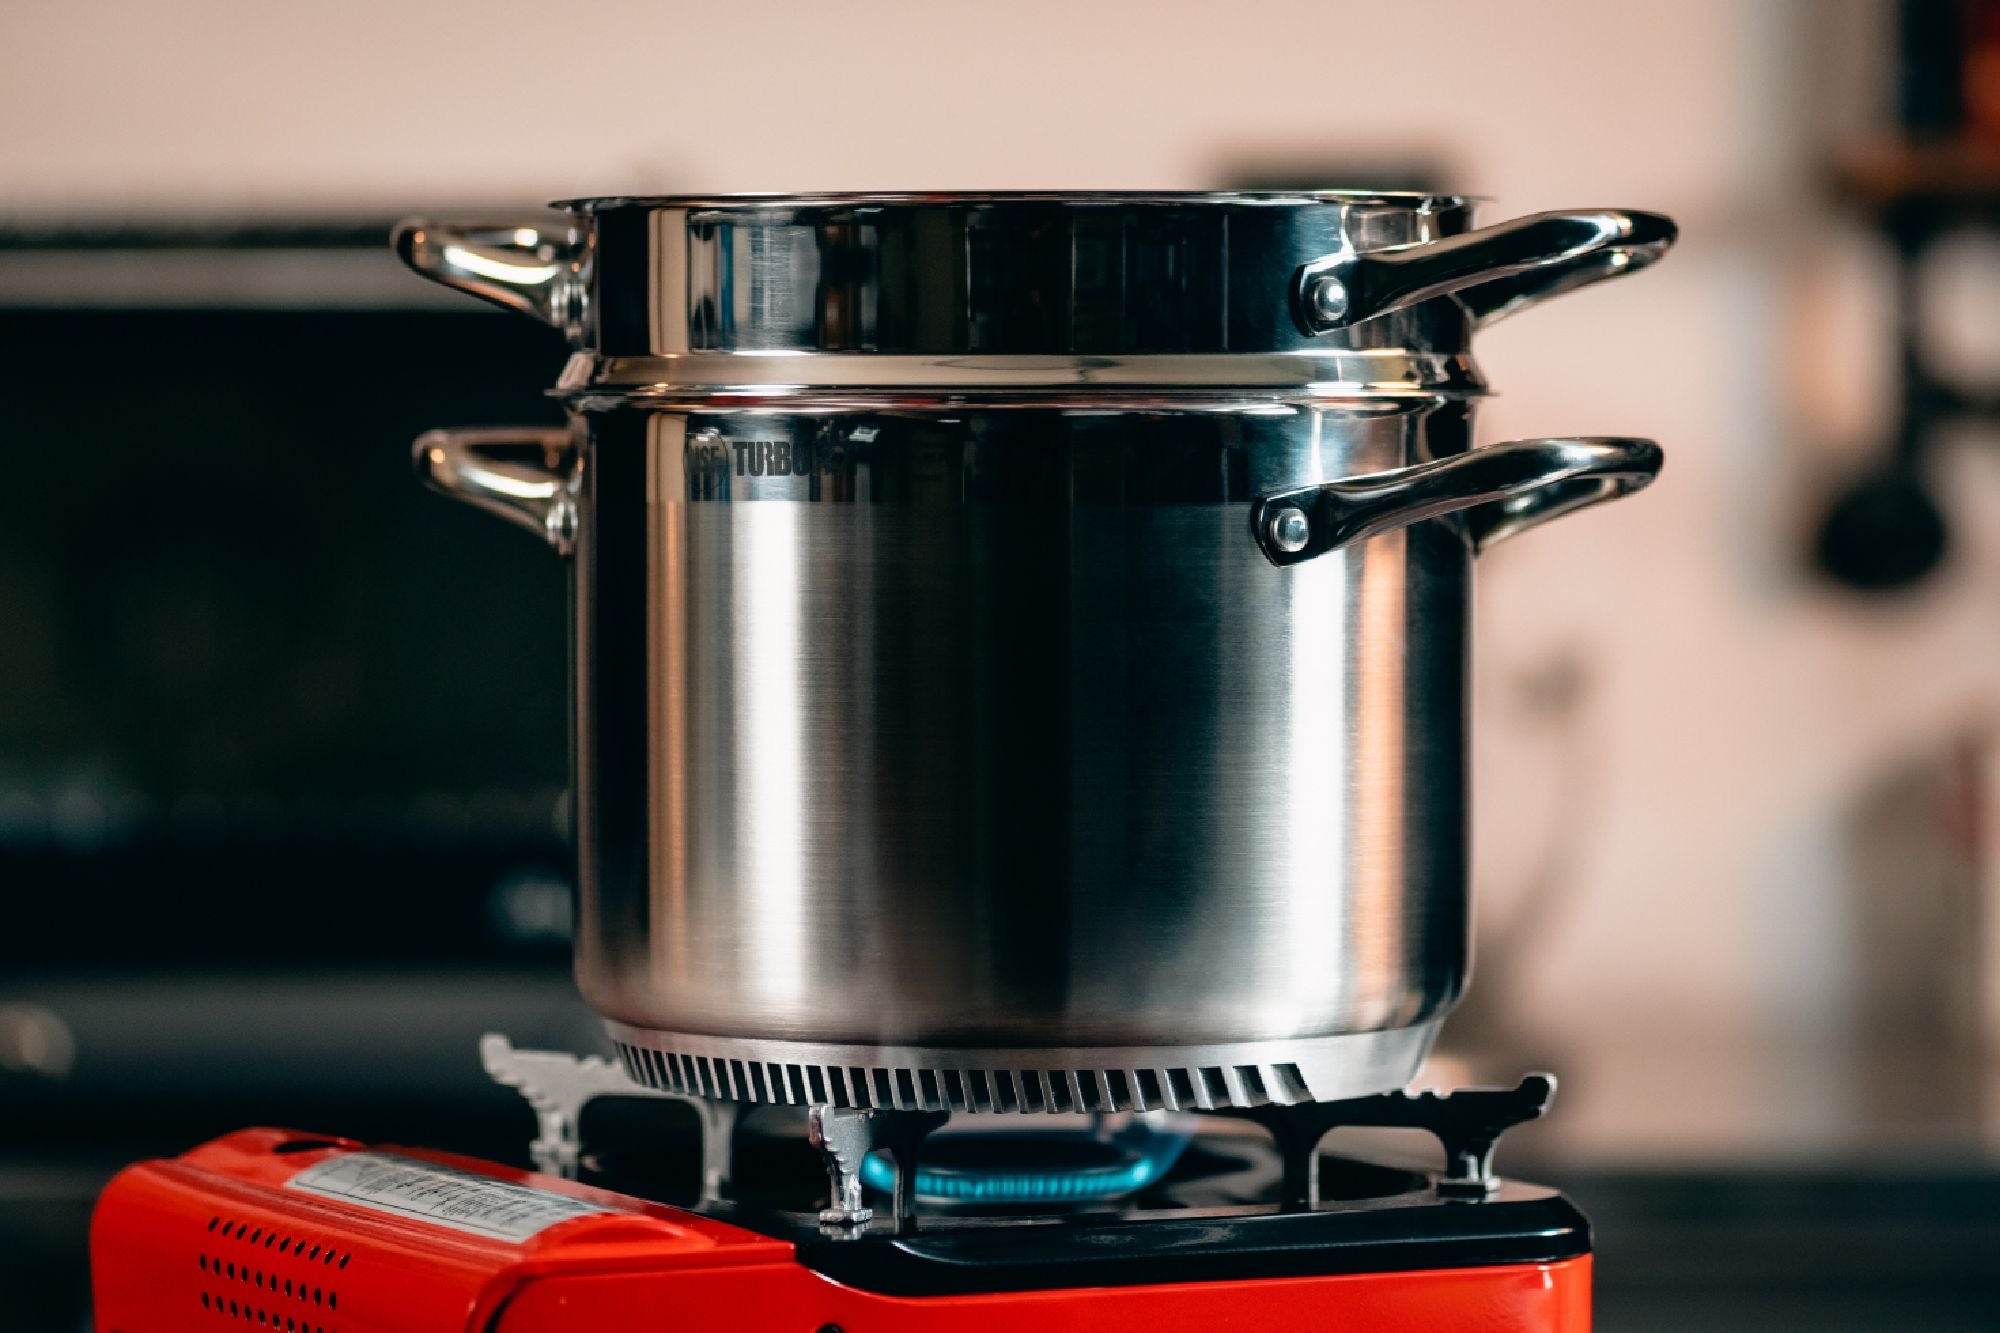 Turbo Pot innovative high-performance cookware